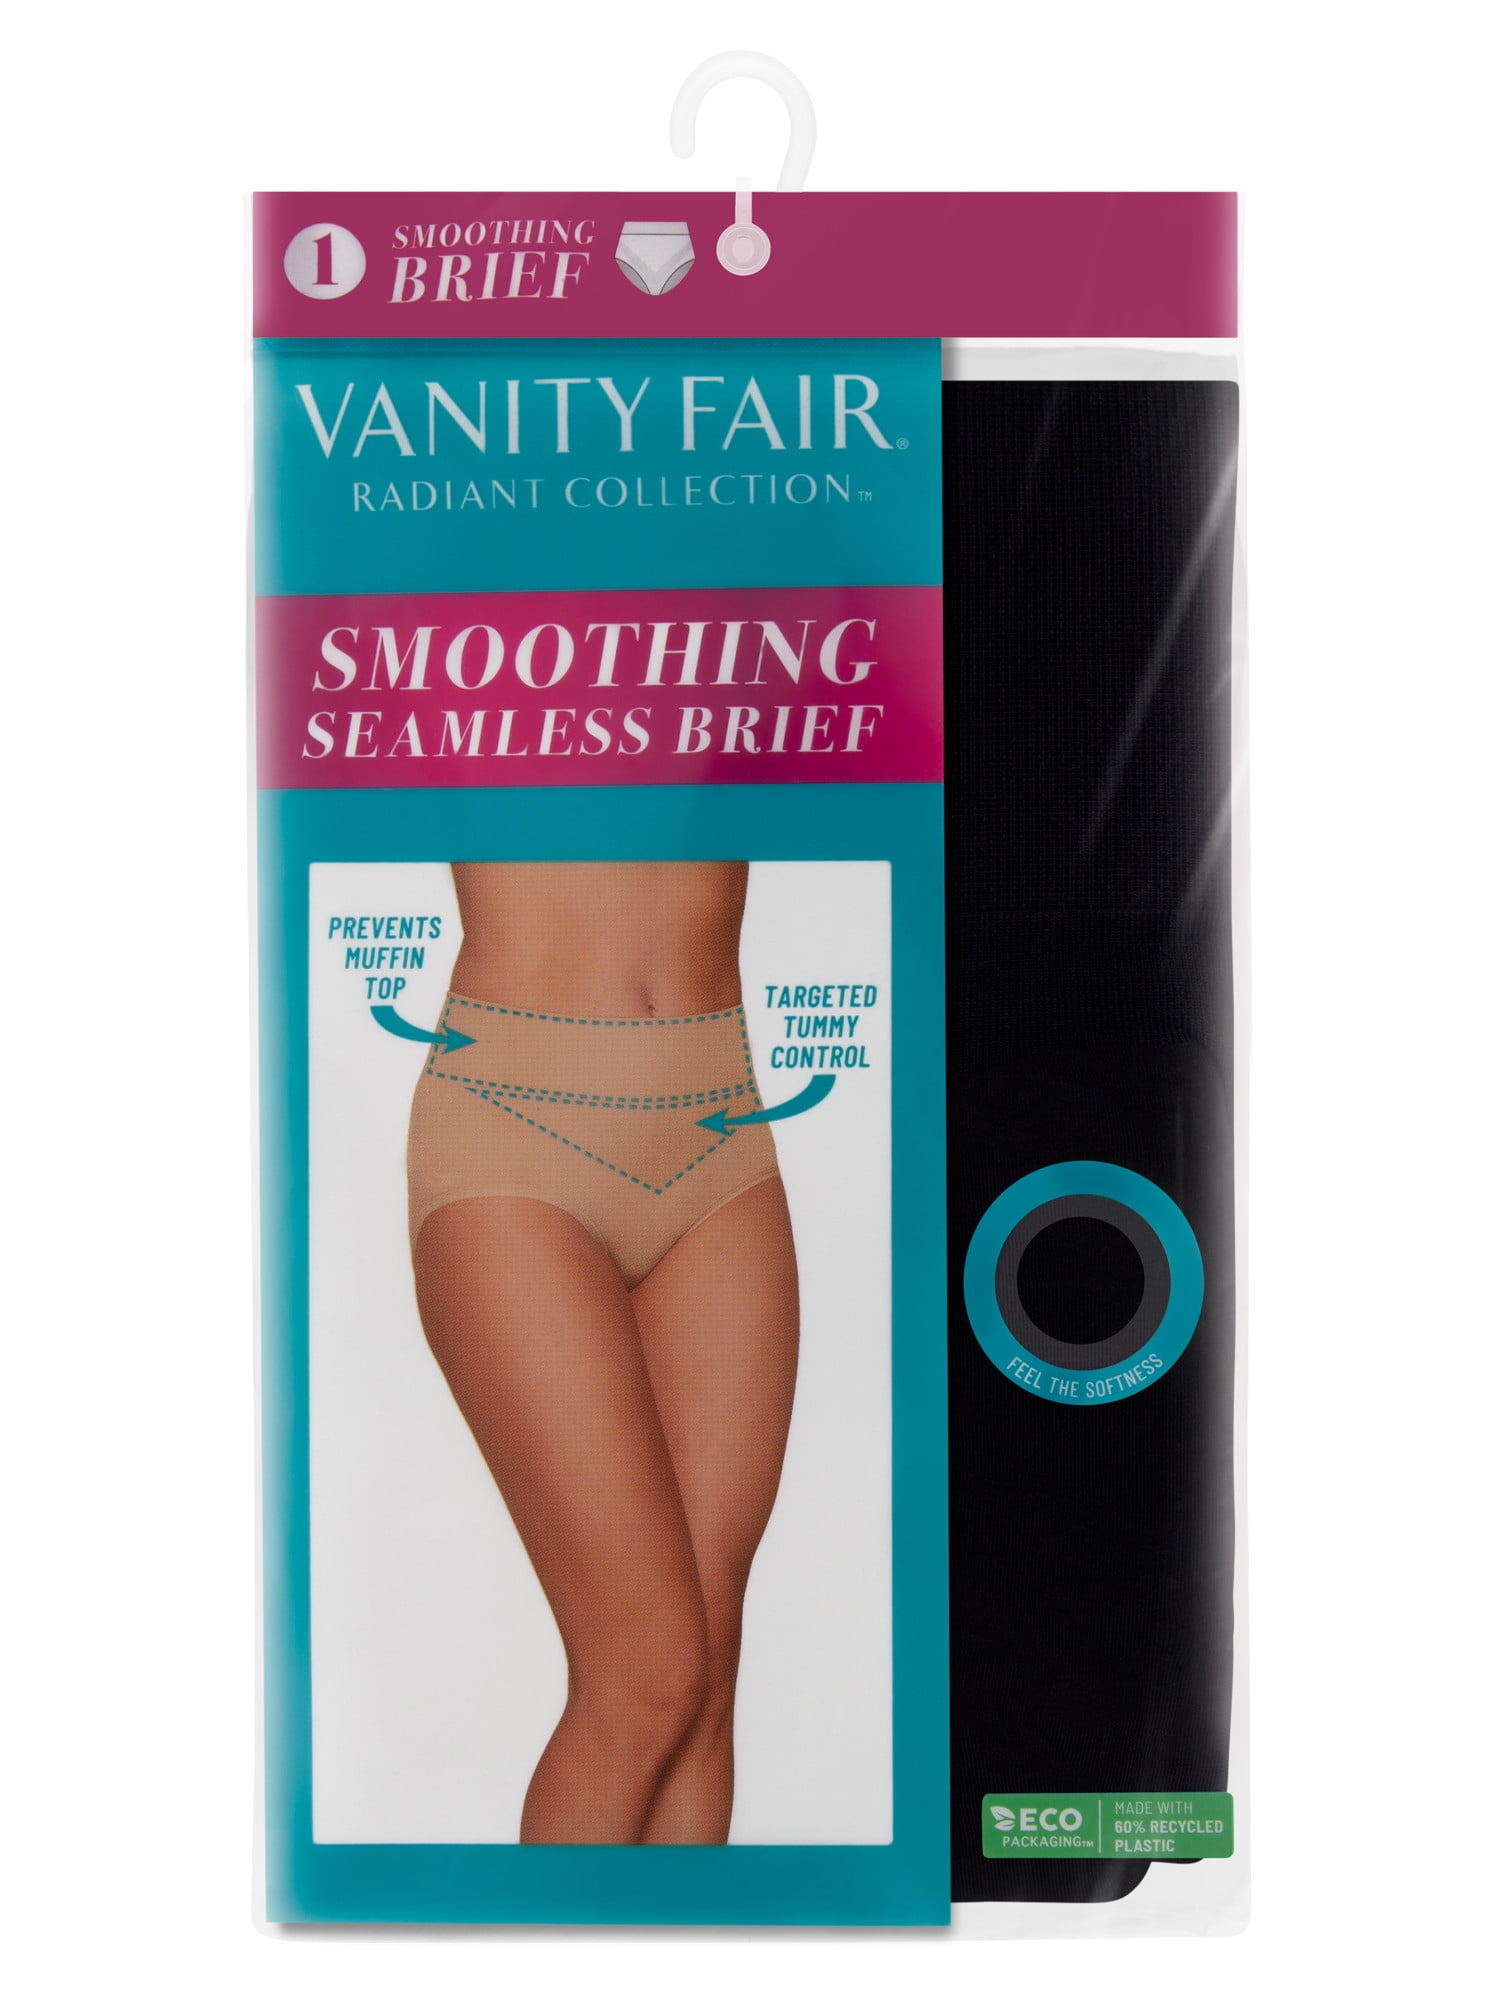 Vanity Fair Radiant Collection Women's Smoothing Seamless Brief Underwear